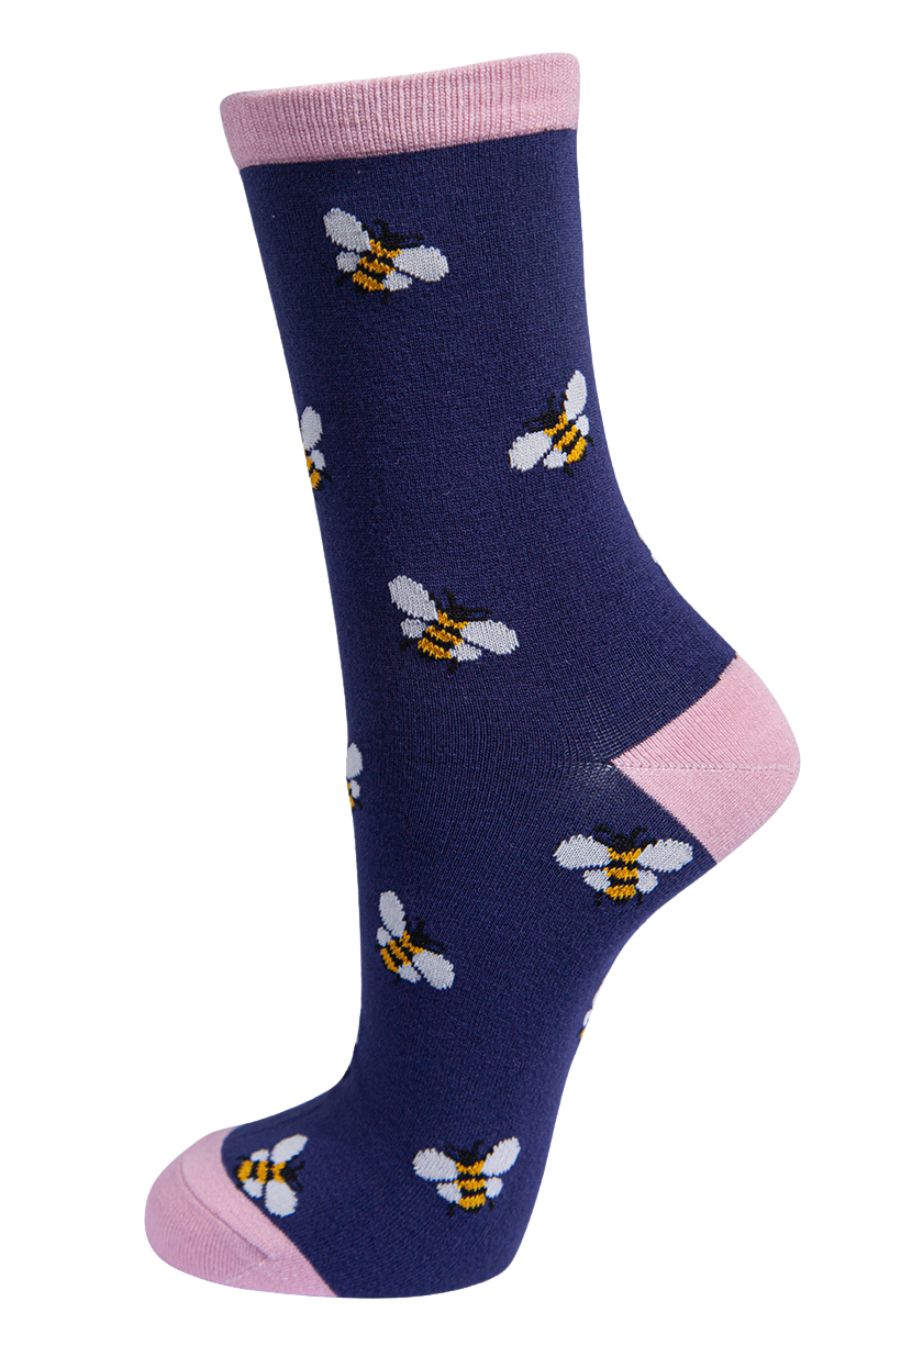 Womens Bamboo Bee Socks Bumblebees Ankle Socks Navy Blue